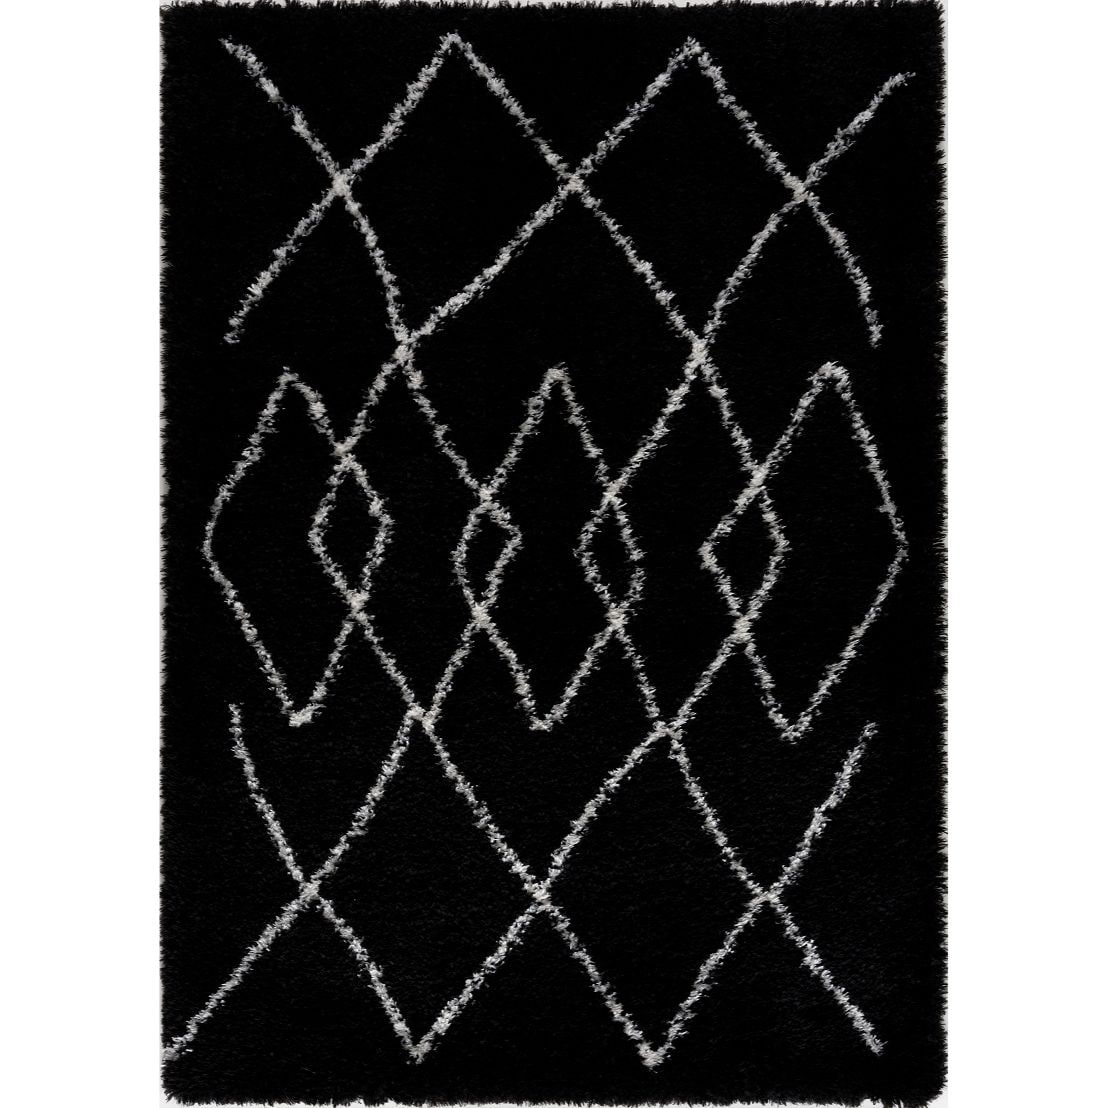 Fanmats  Gray & Black Abstract Diamond 3x5 Rug